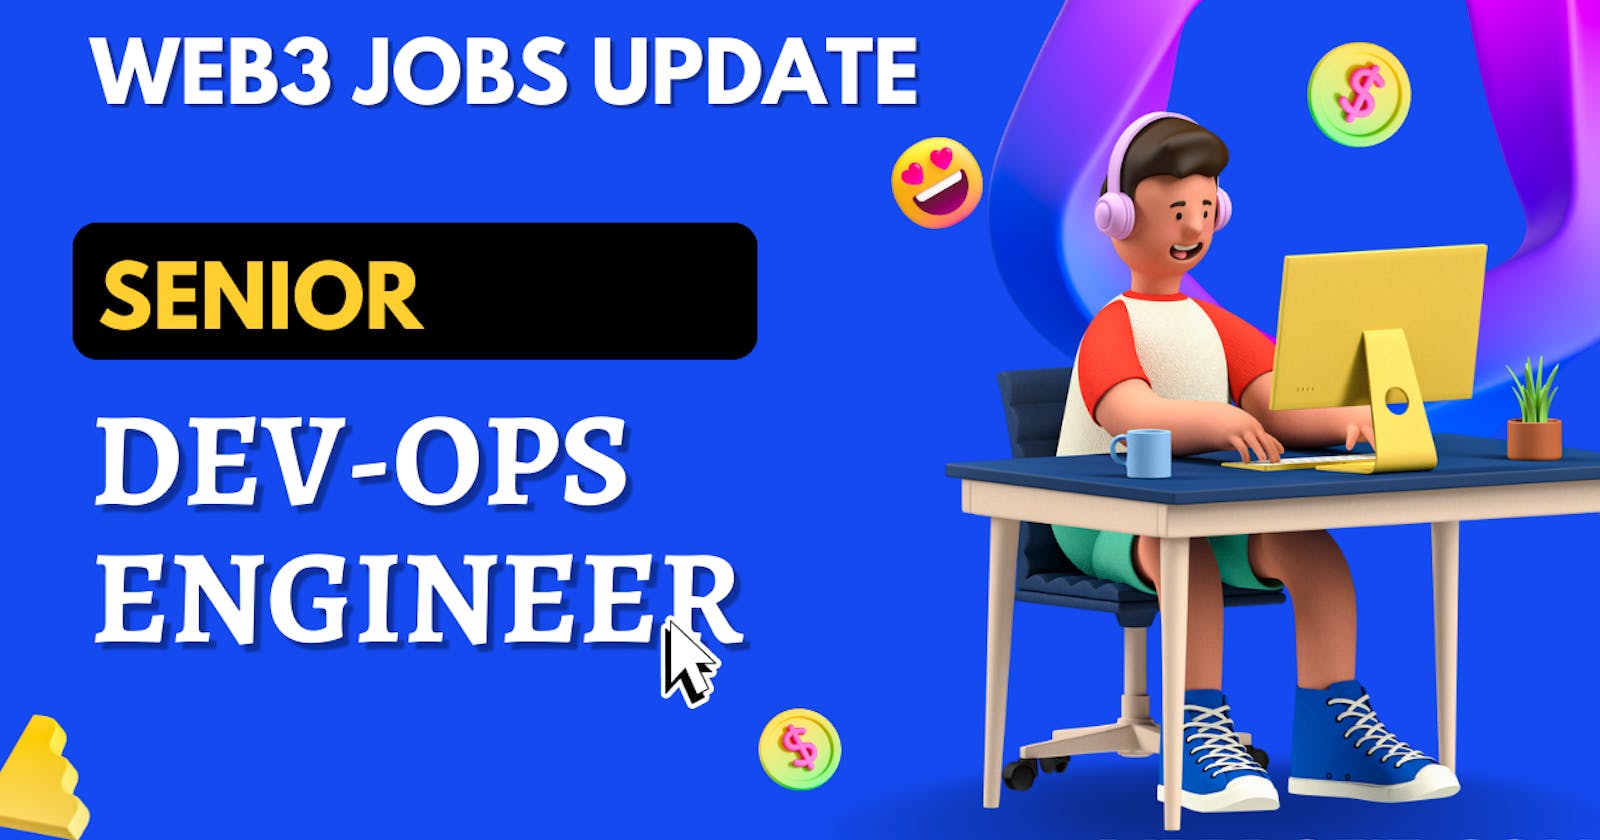 Web3 Jobs: Senior DevOps Engineer